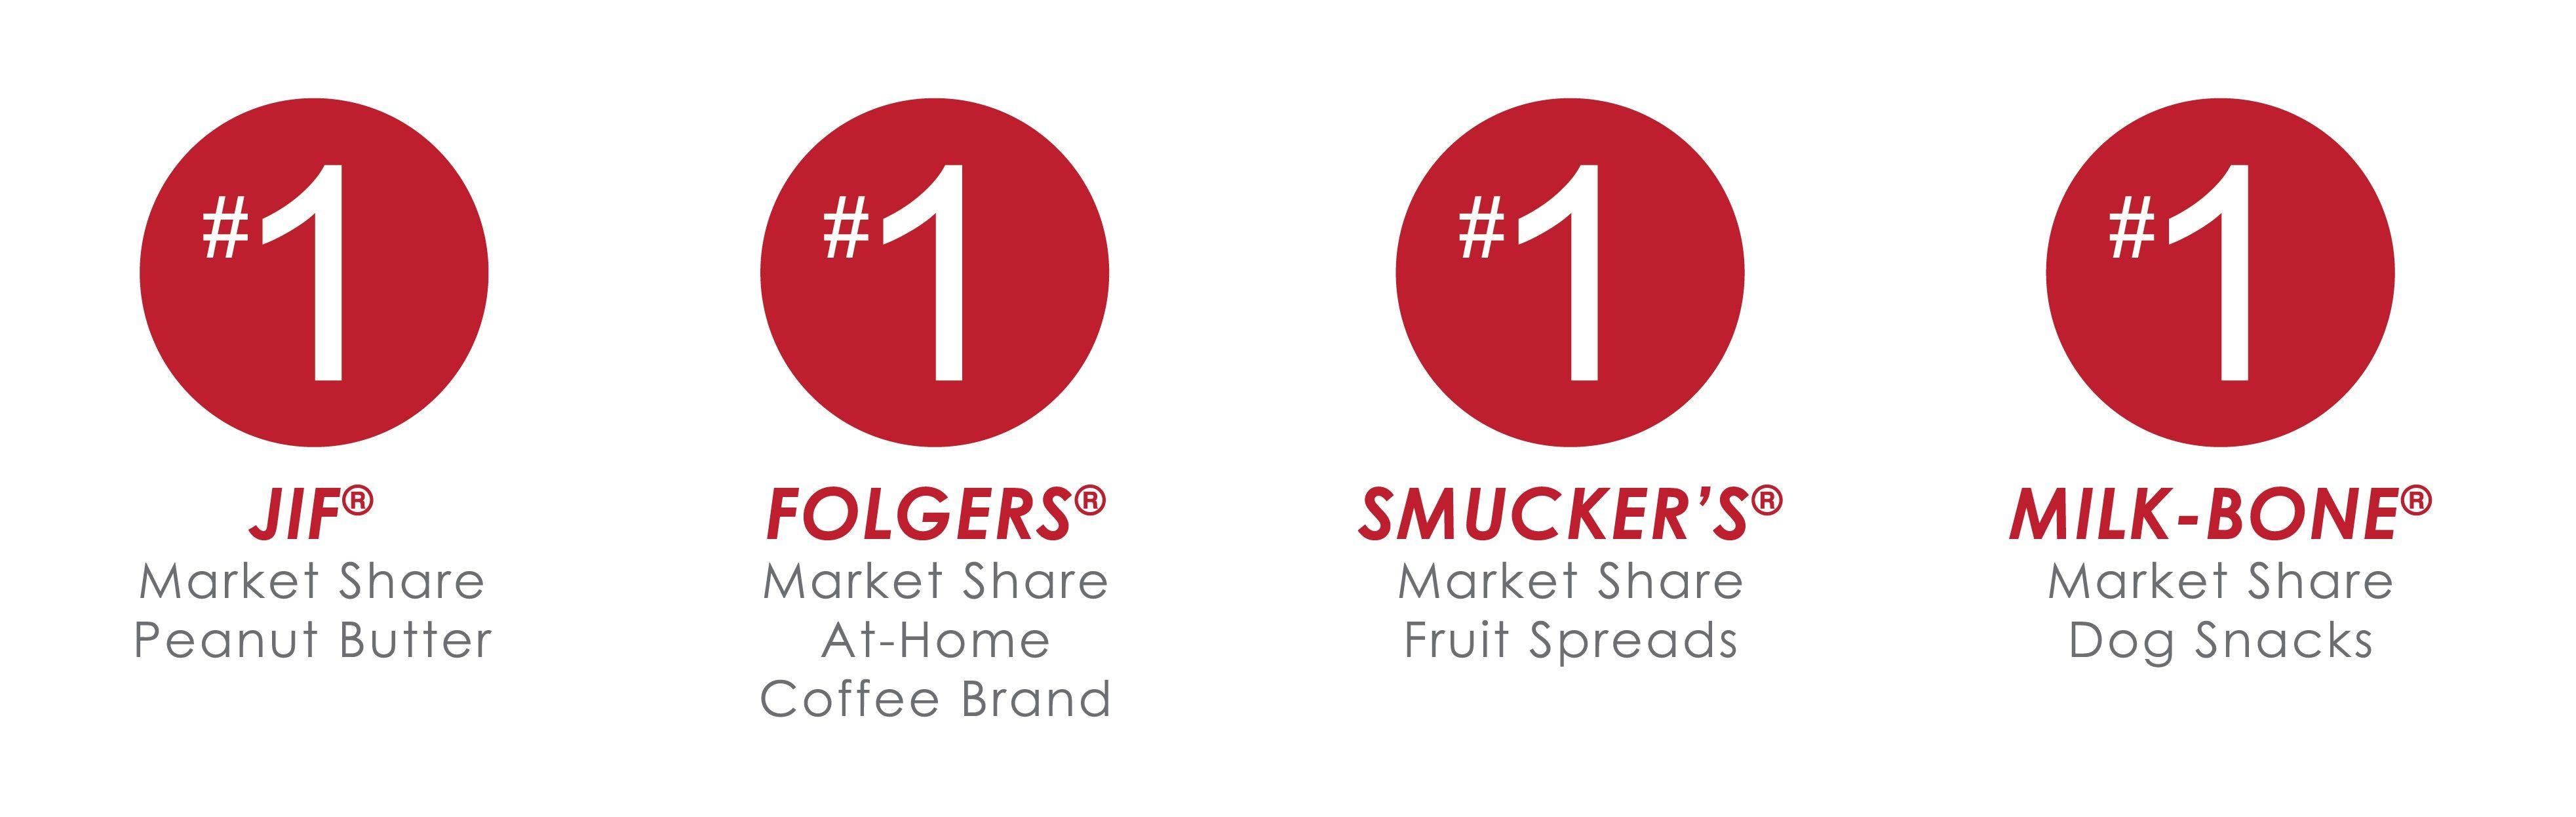 Leading Coffee Brand in USA Logo - Smucker Brands J.M. Smucker Company